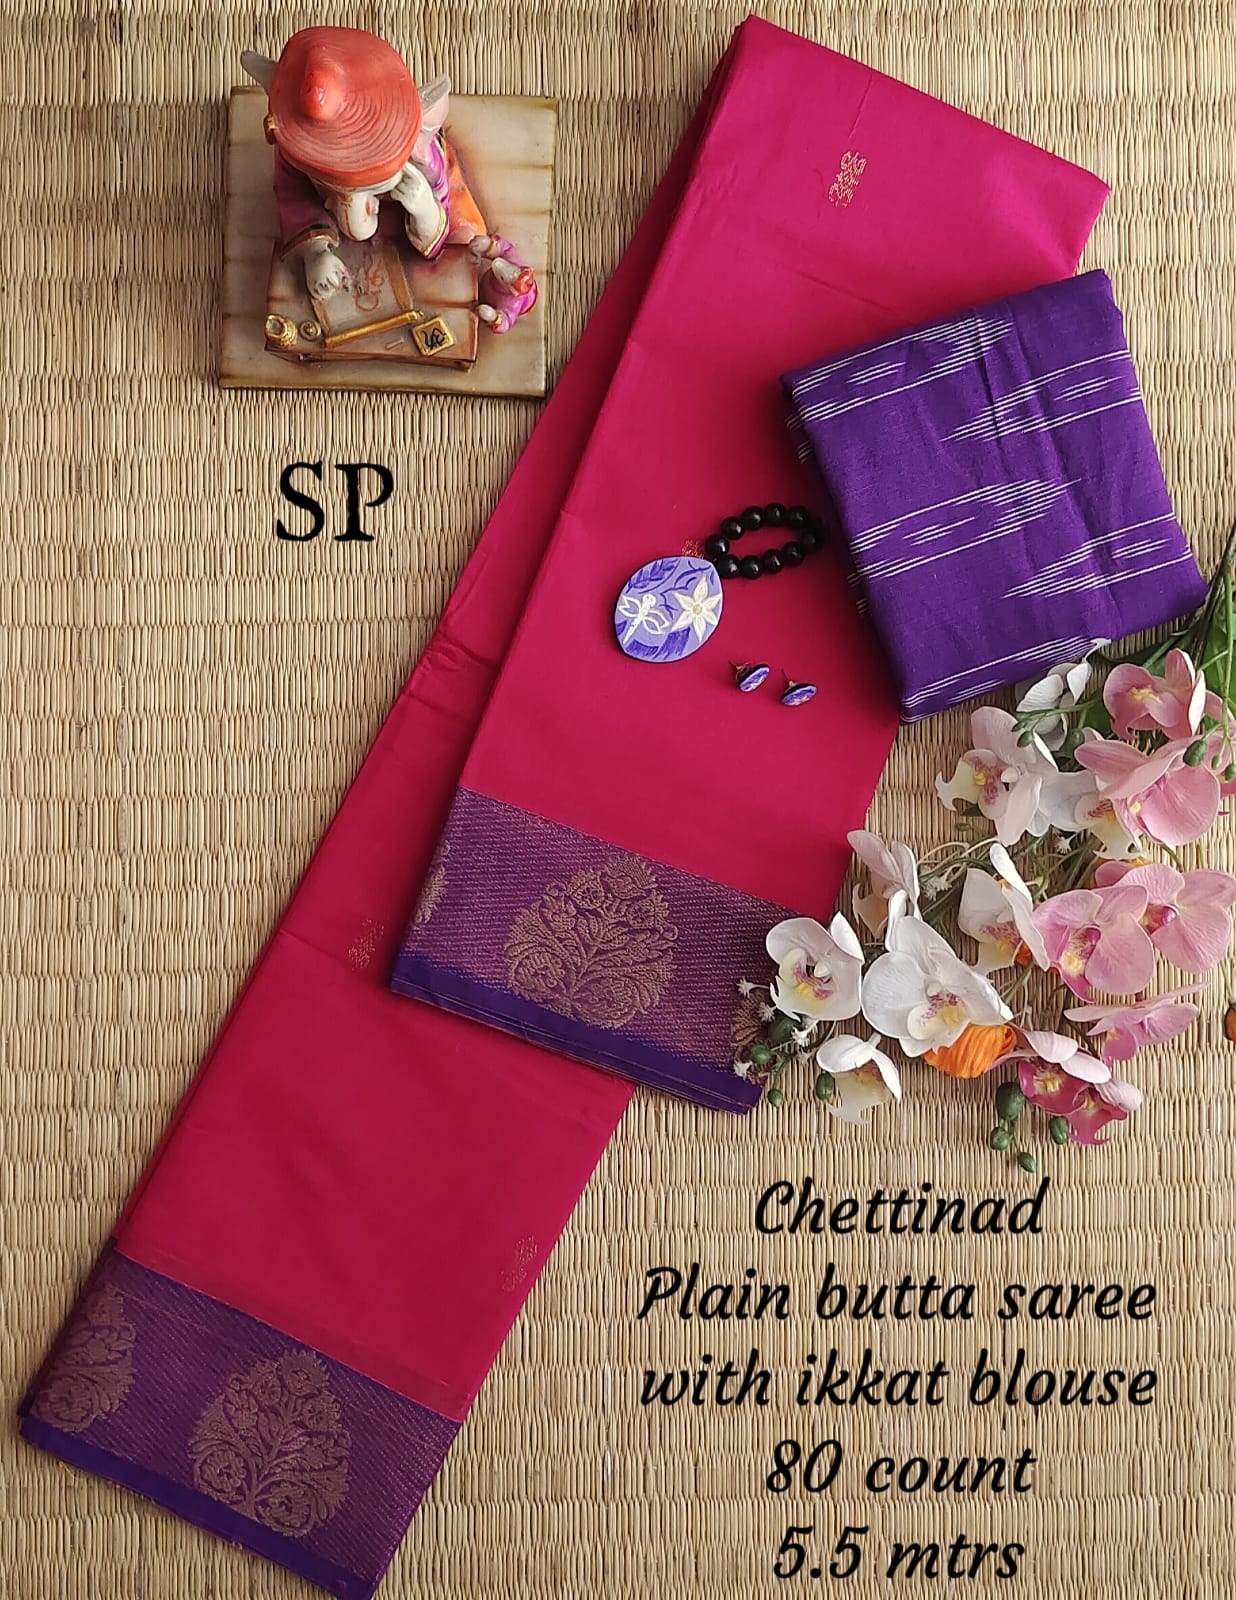 Chettinad fancy cotton saree